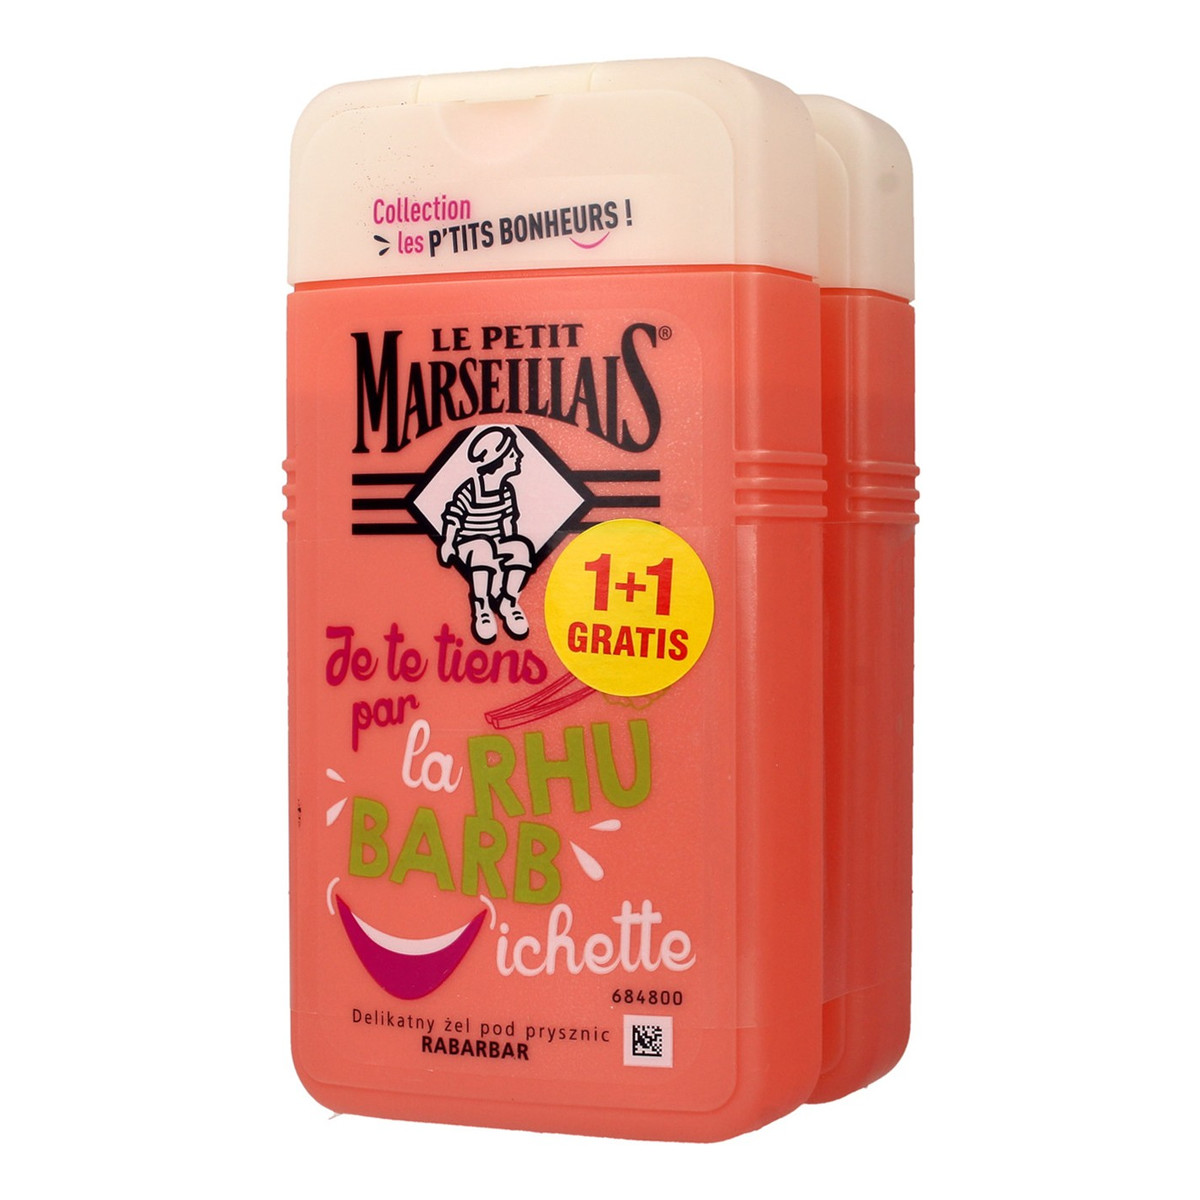 Le Petit Marseillais Żel pod prysznic Rabarbar 1+1 gratisx2 250ml